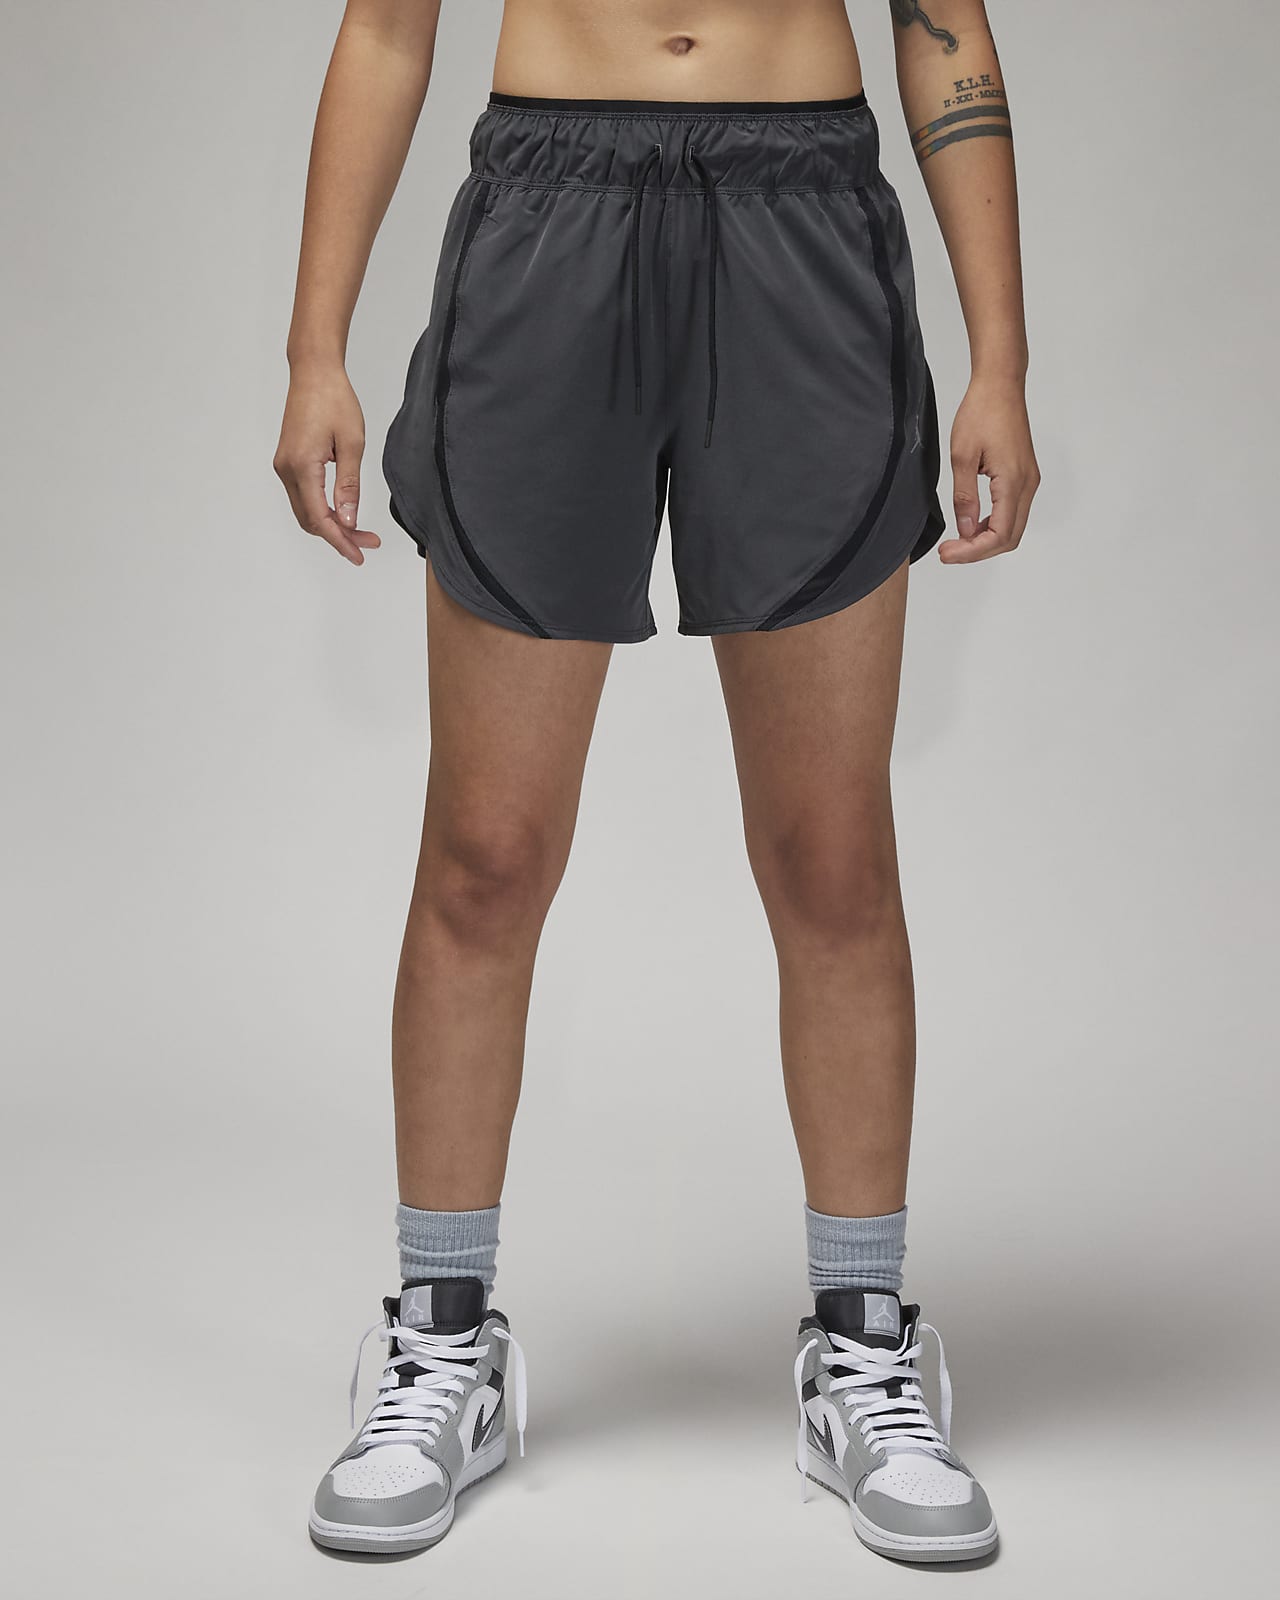 Jordan Sport Women's Shorts